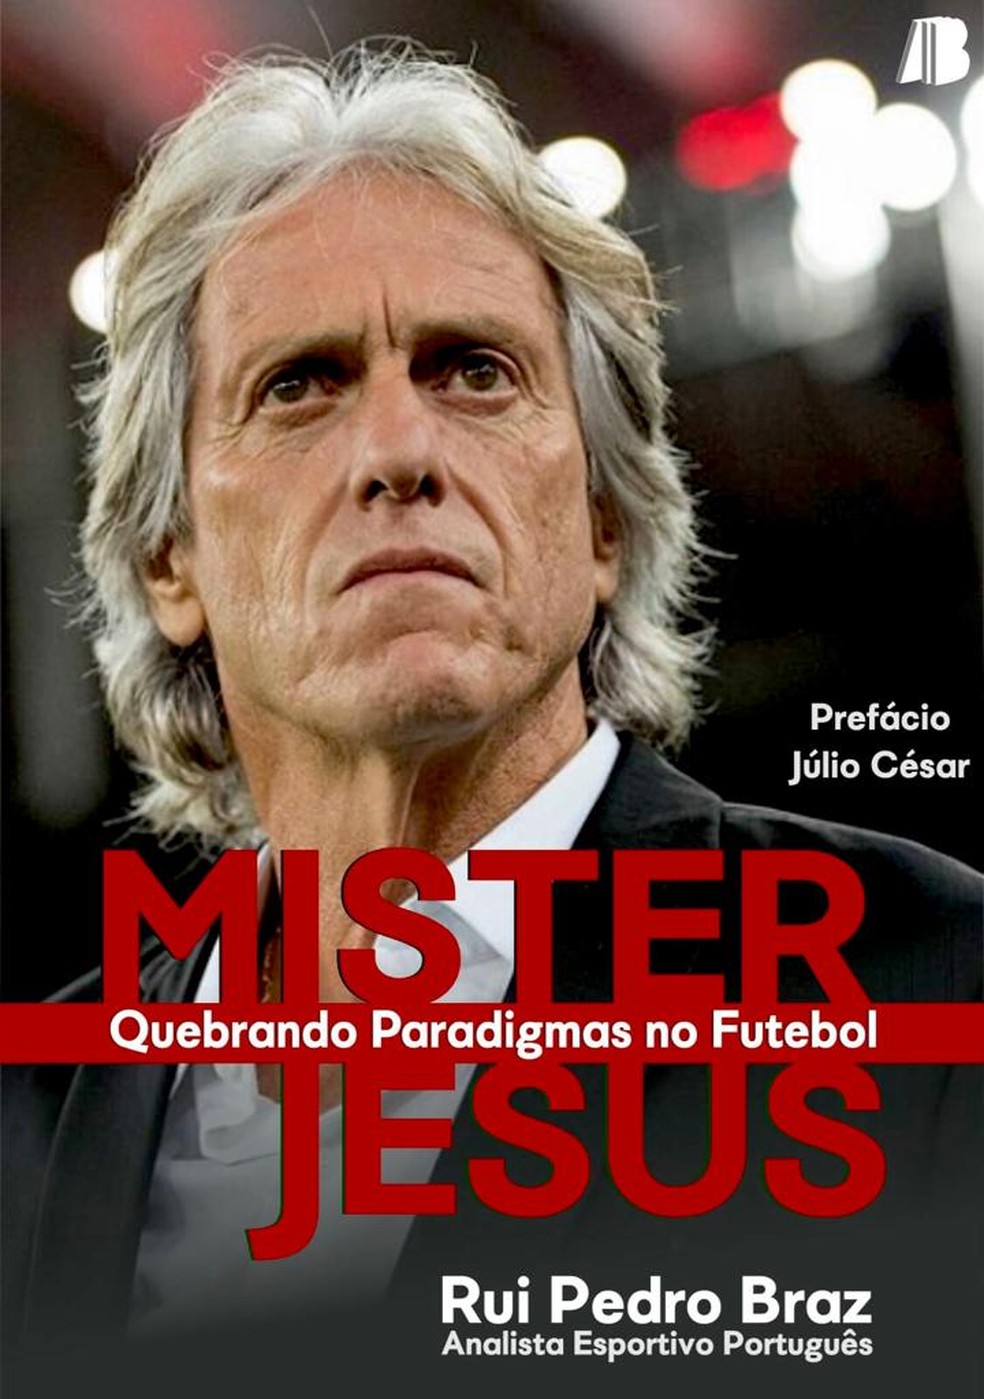 Os 11 capítulos da segunda vida de Jesus no Benfica